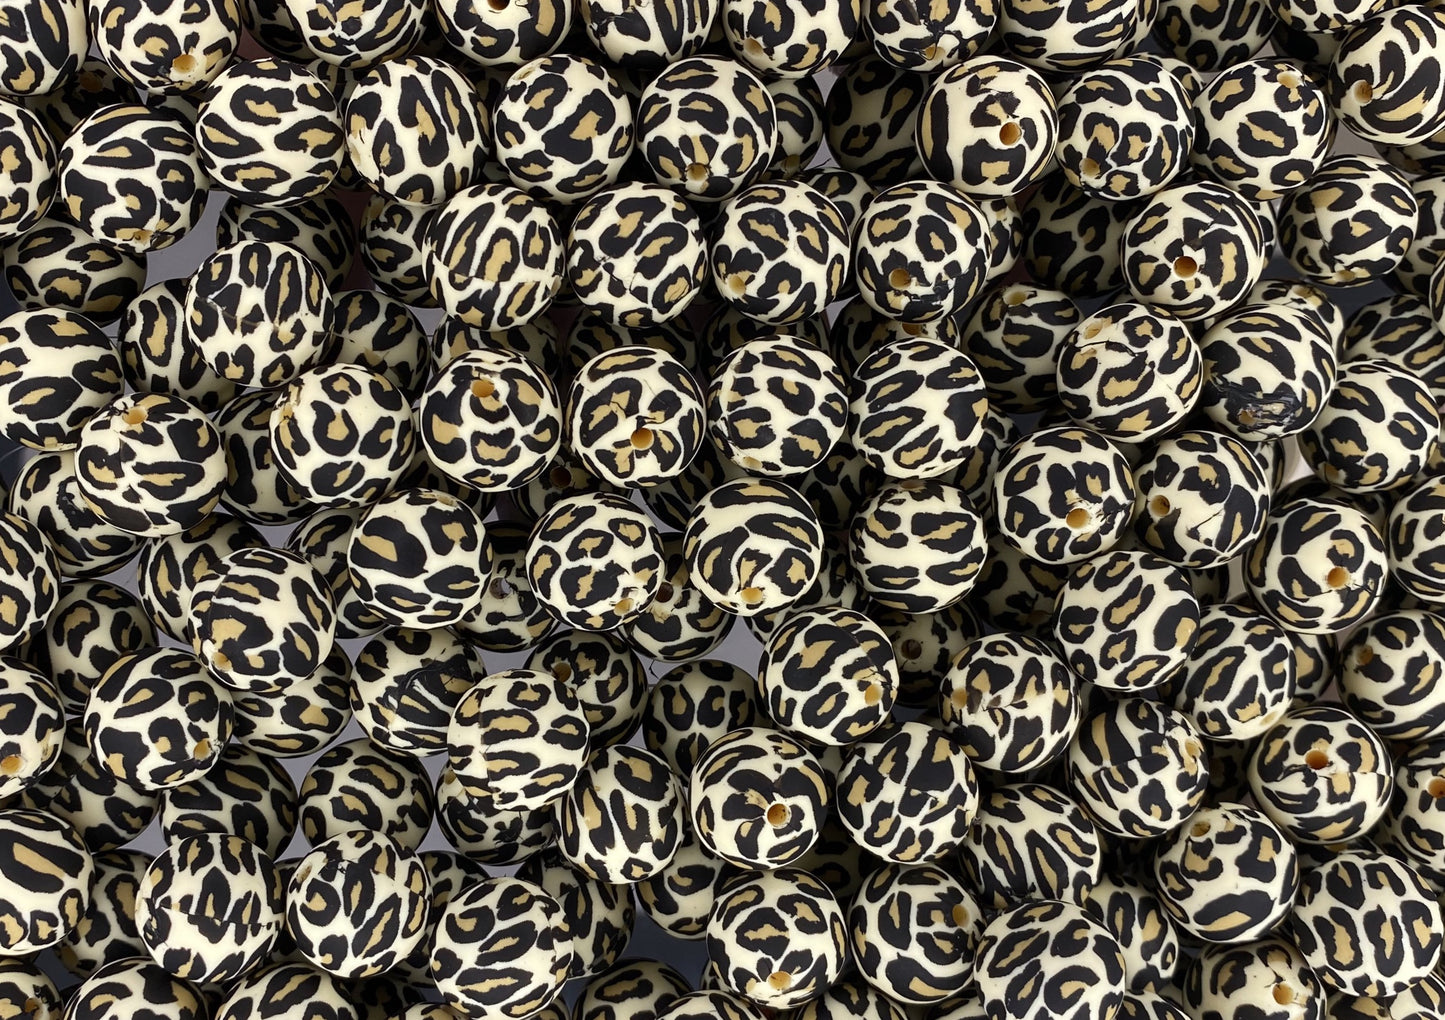 Leopard Printed 15mm Bead